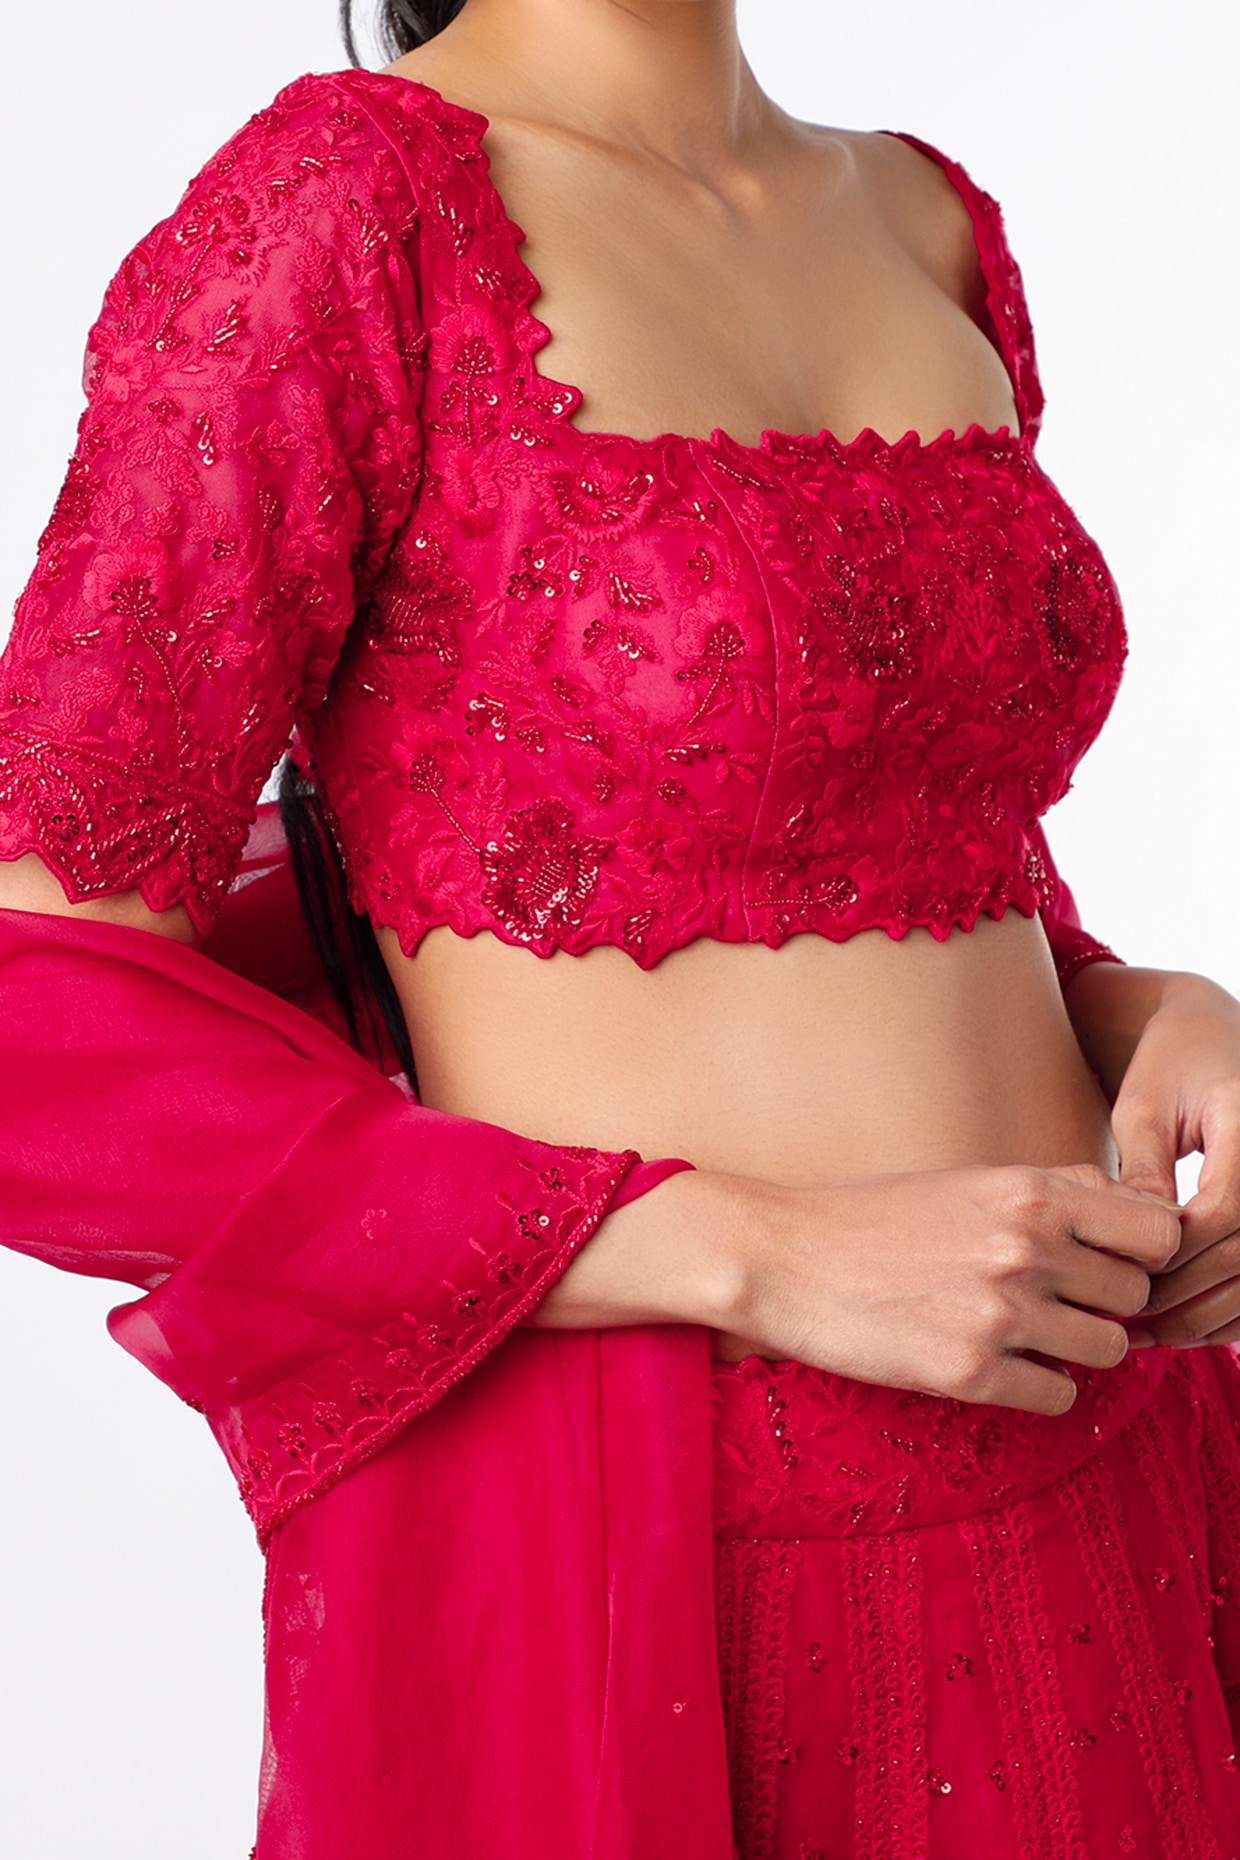 BridalTrunk - Online Indian Multi Designer Fashion Shopping Anushree Reddy  - Designers